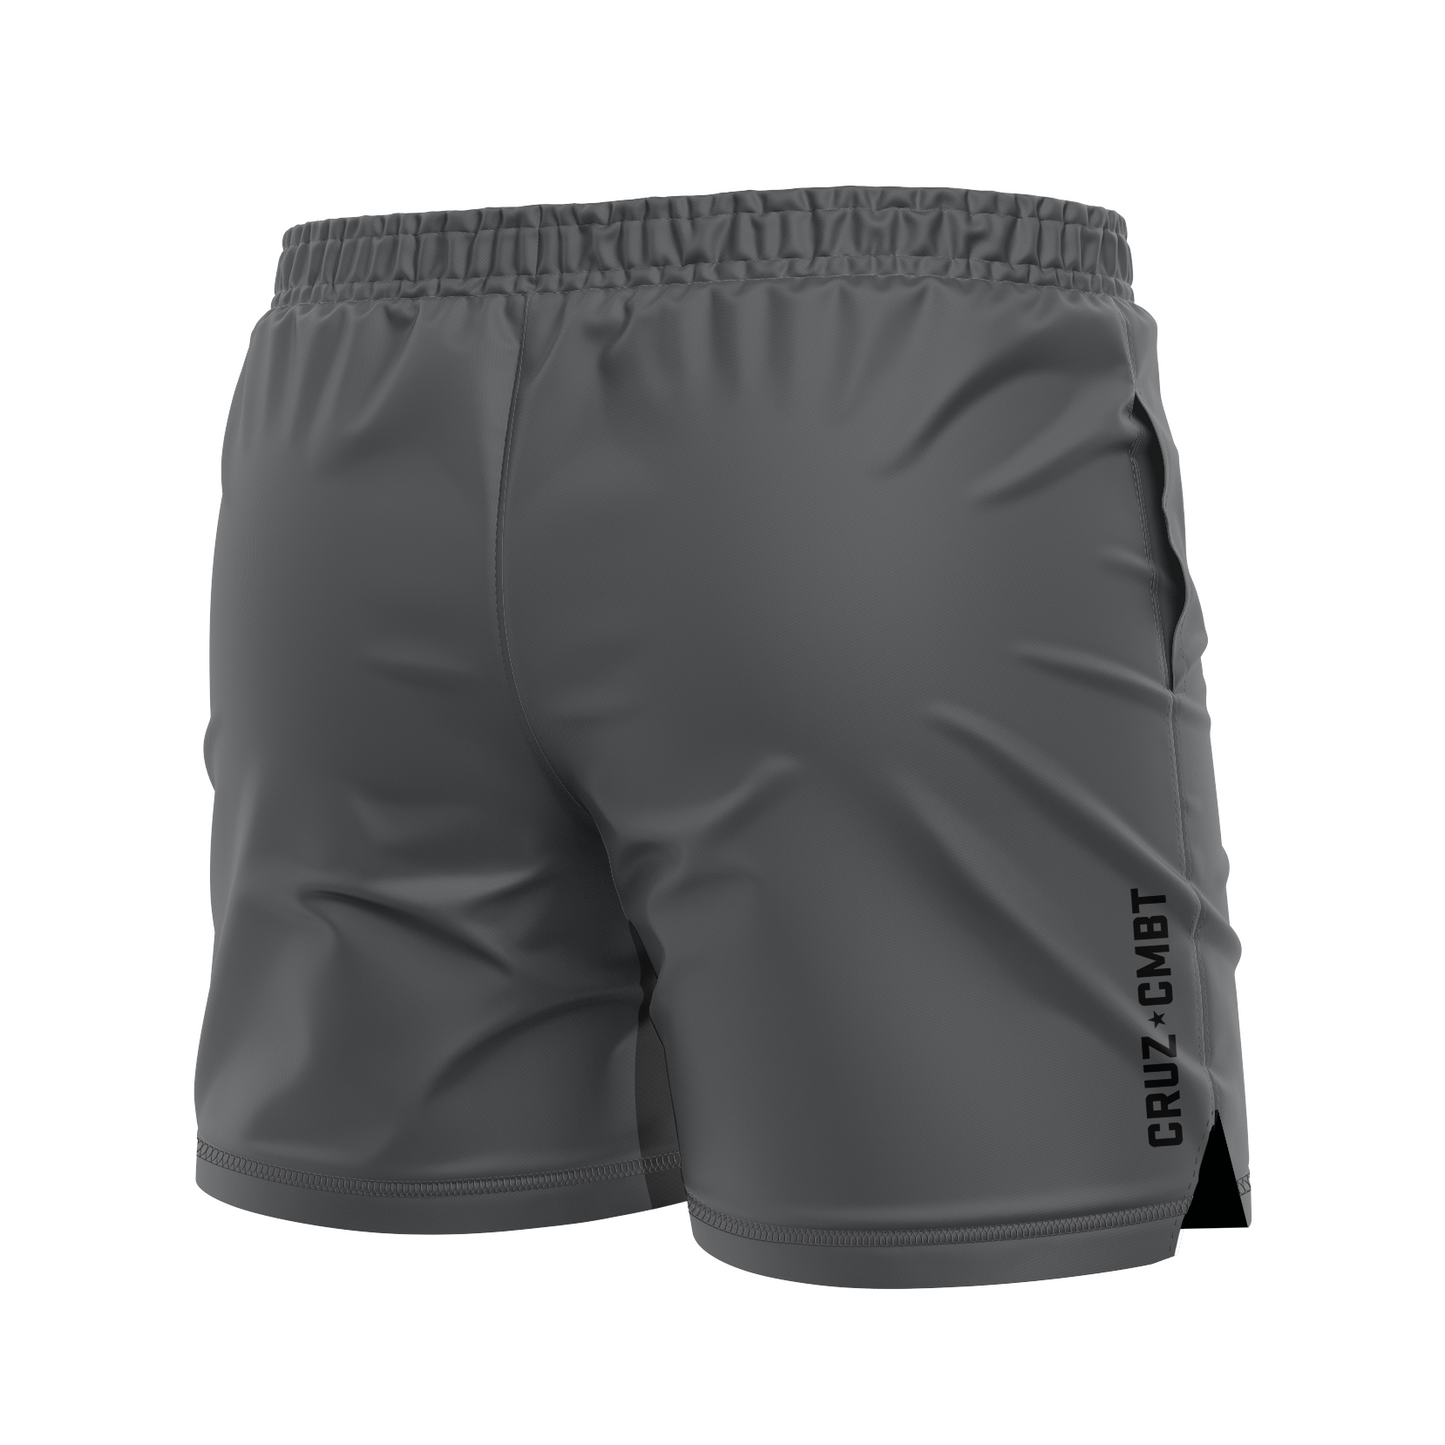 Base Collection men's FC shorts, grey